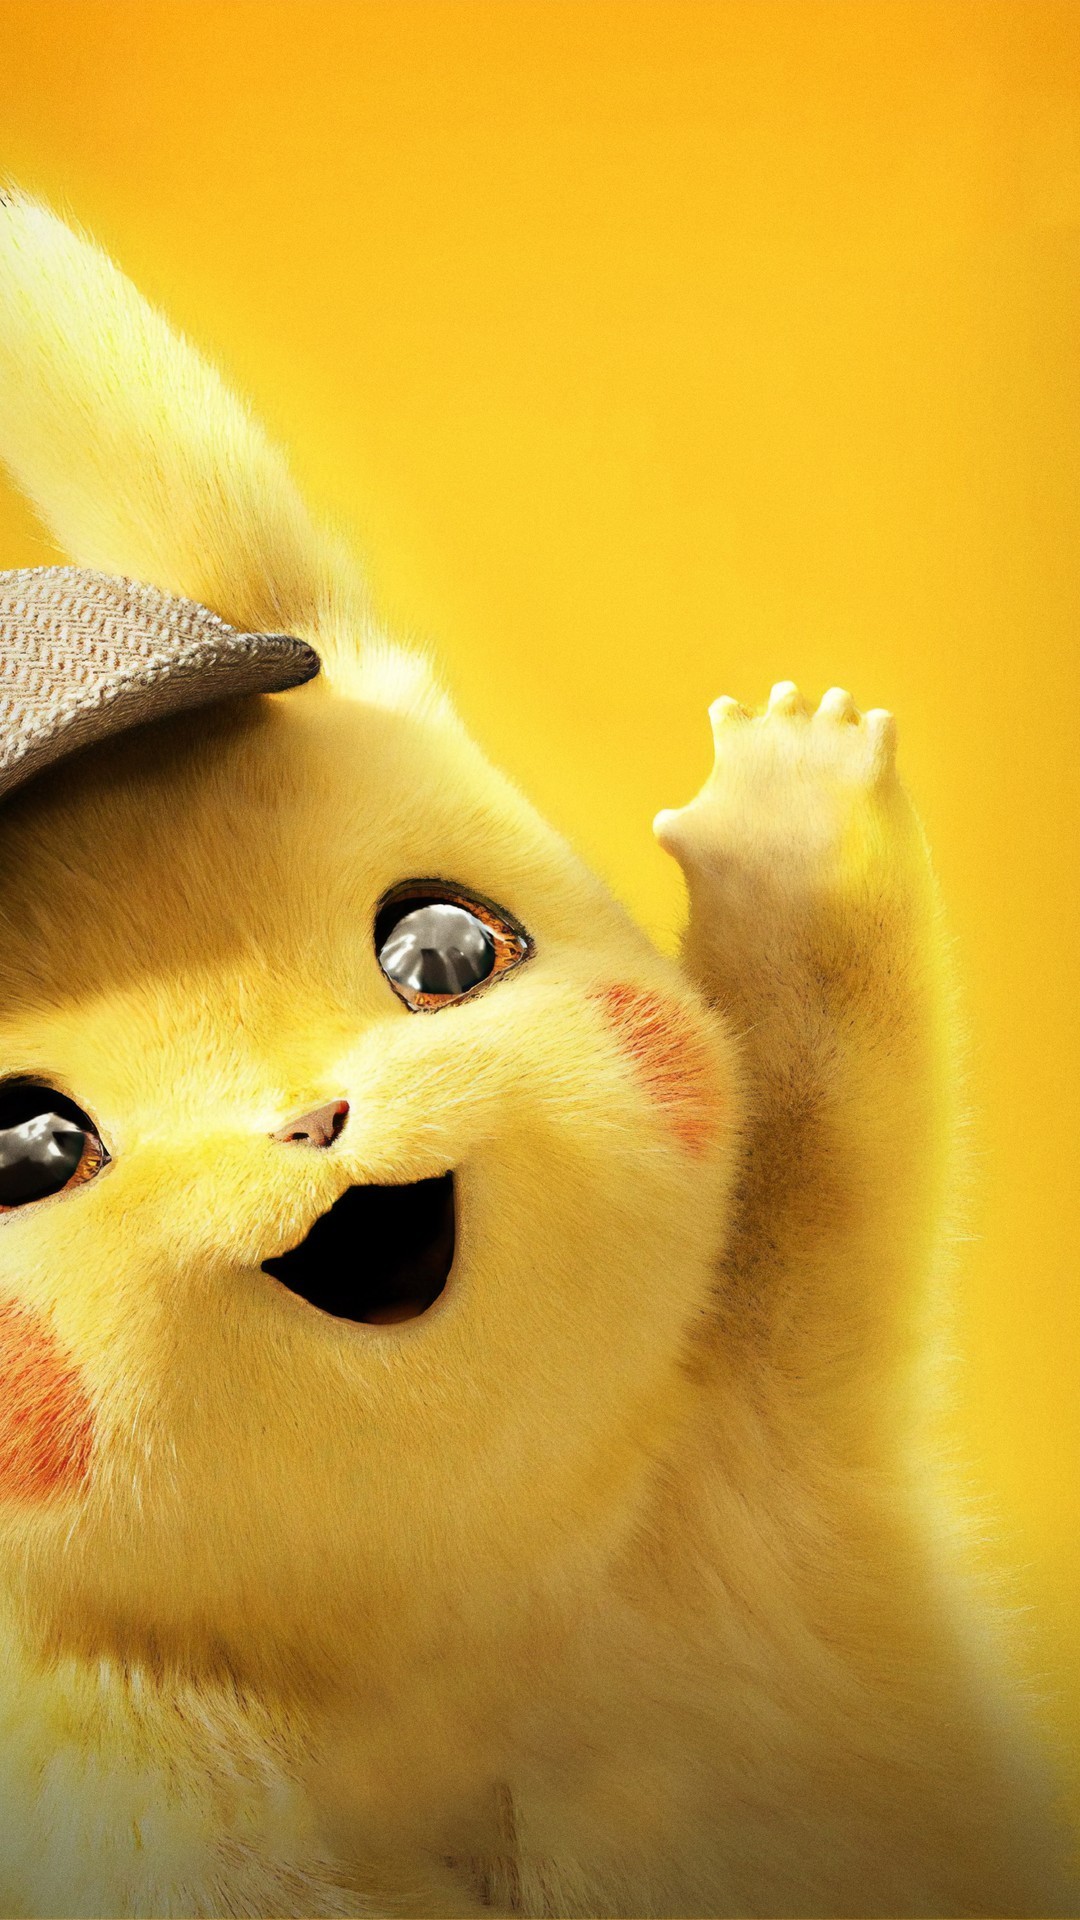 Pok Mon Detective Pikachu Wallpaper For iPhone Cute